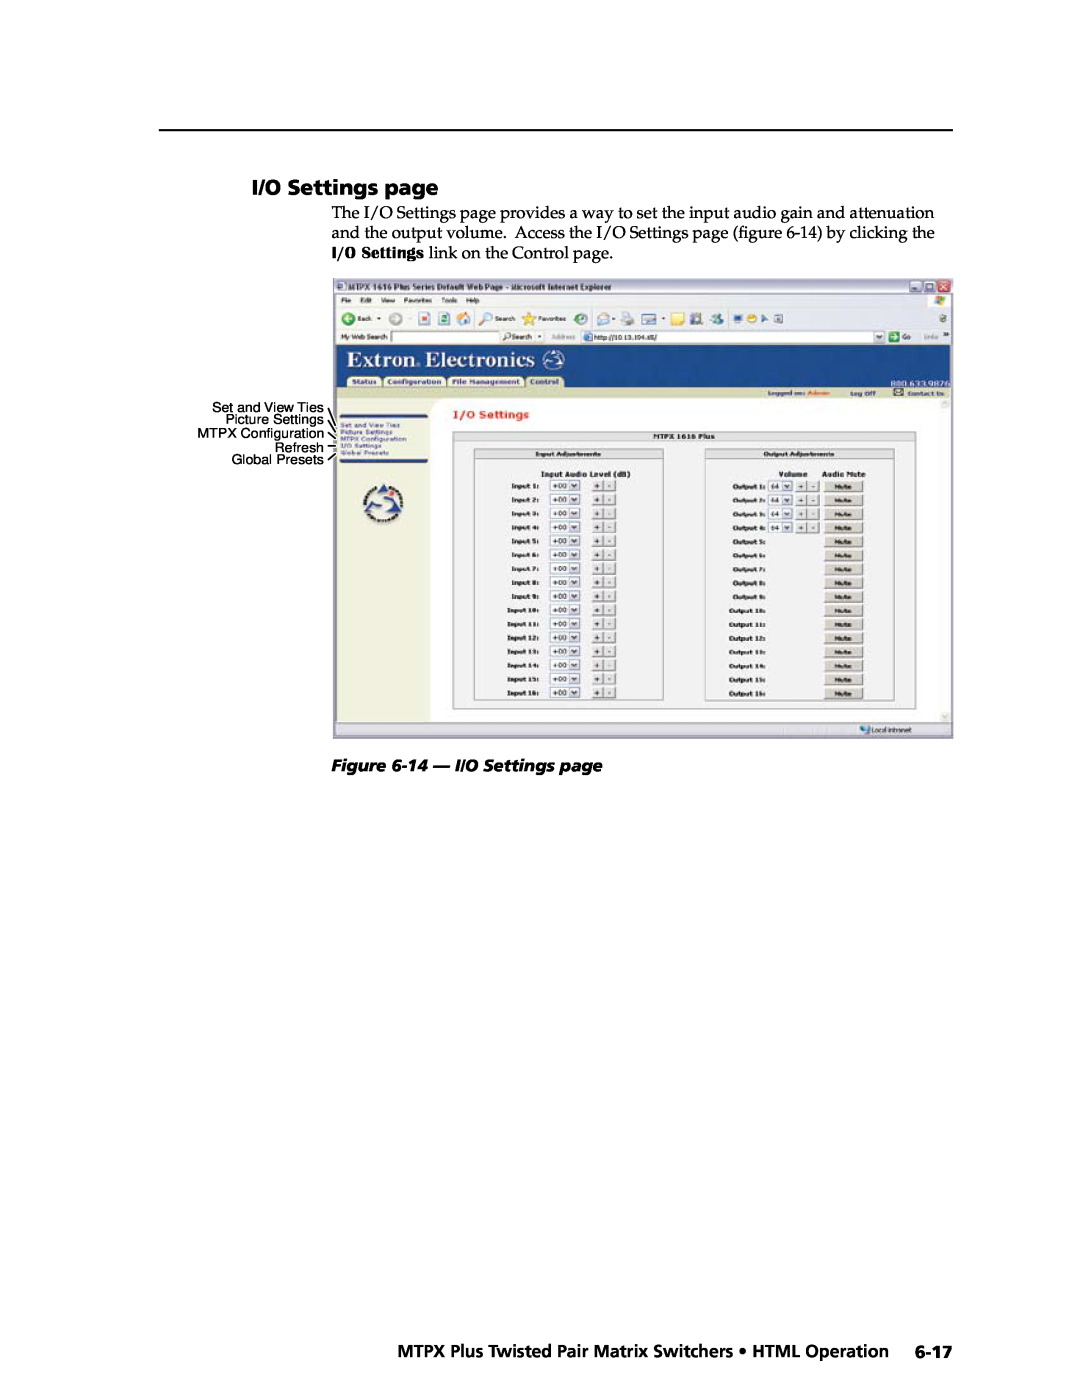 Extron electronic MTPX Plus Series 14 - I/O Settings page, MTPX Plus Twisted Pair Matrix Switchers HTML Operation 